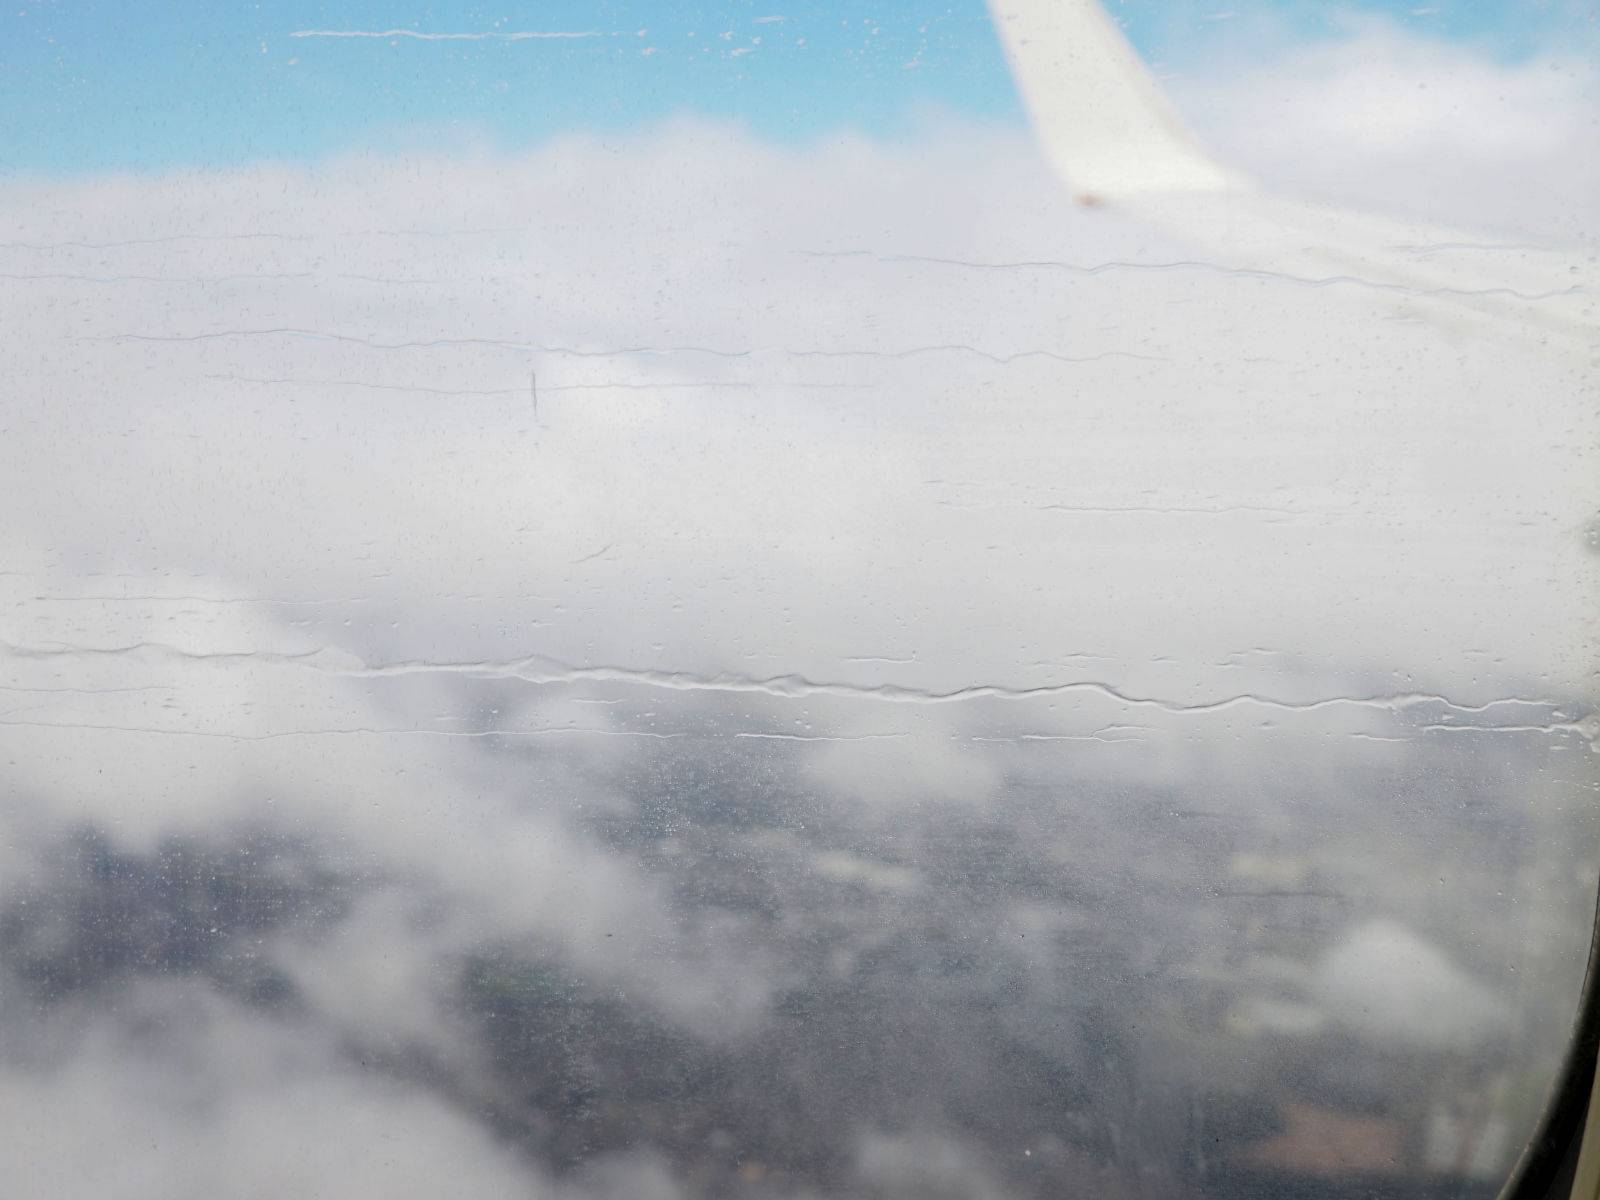 Condensation on the plane window